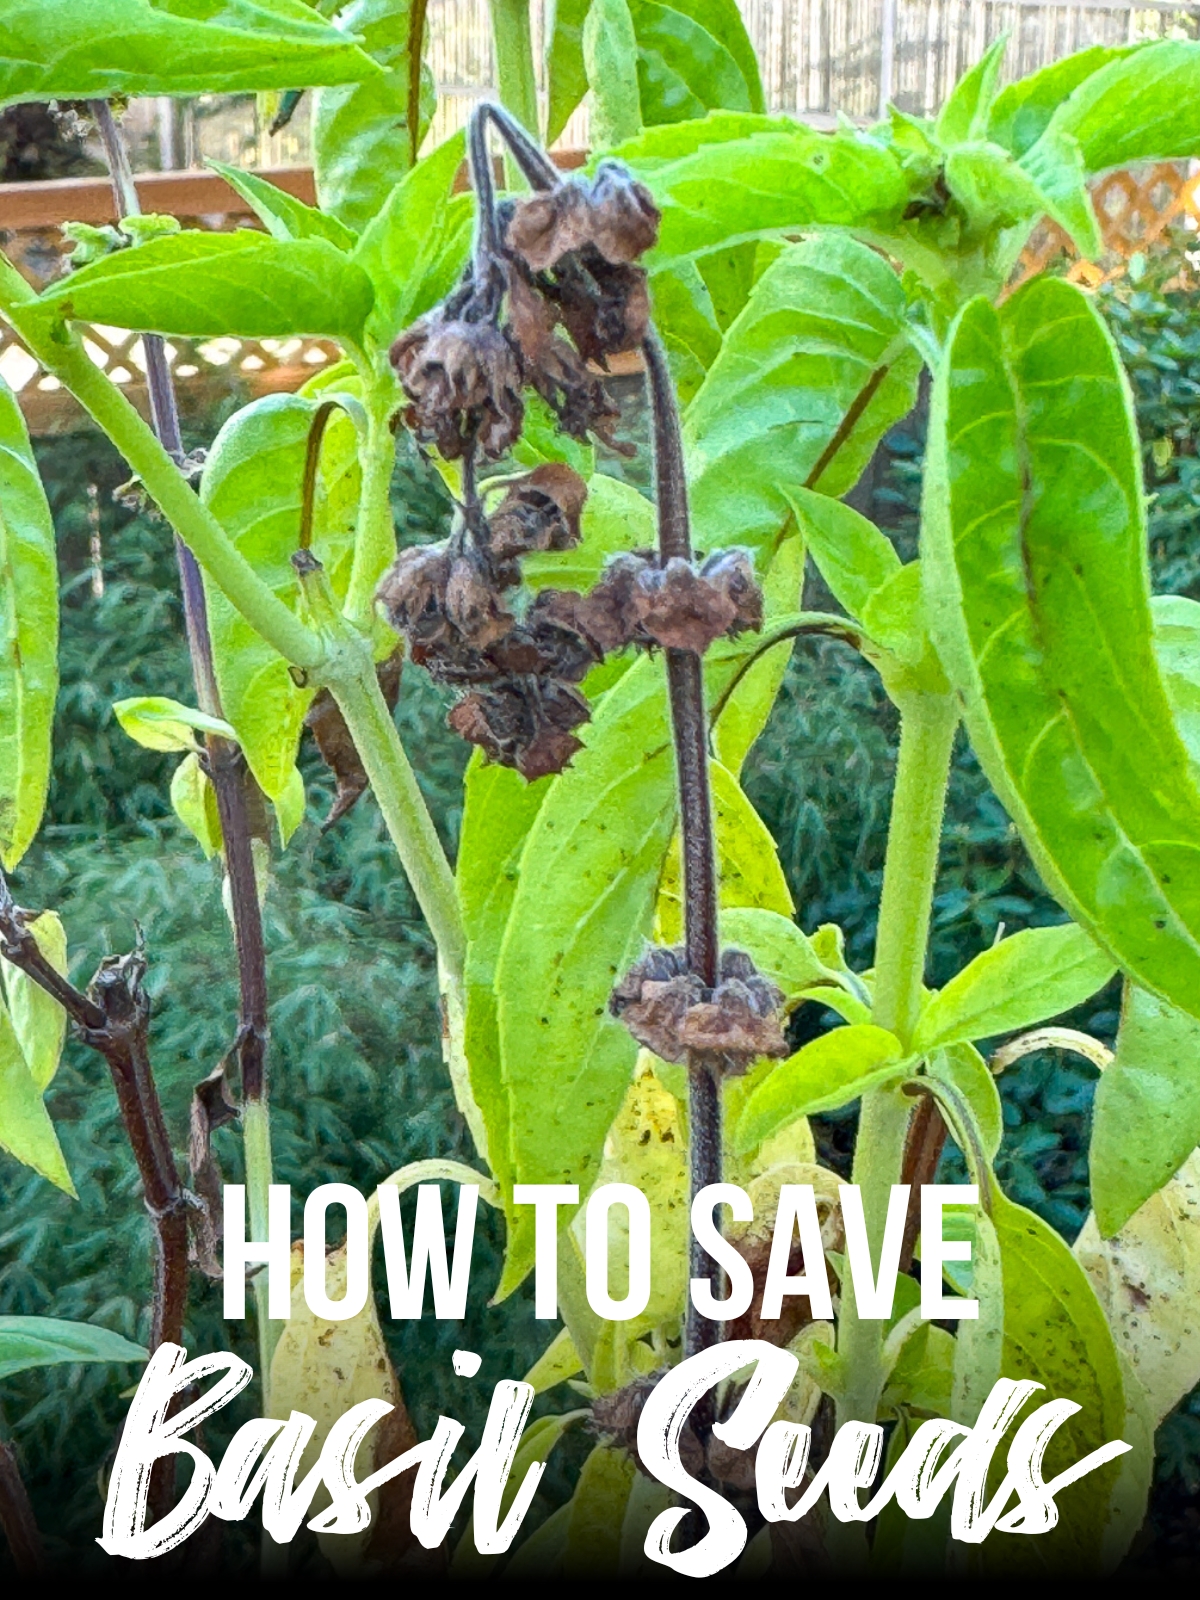 how to save basil seeds